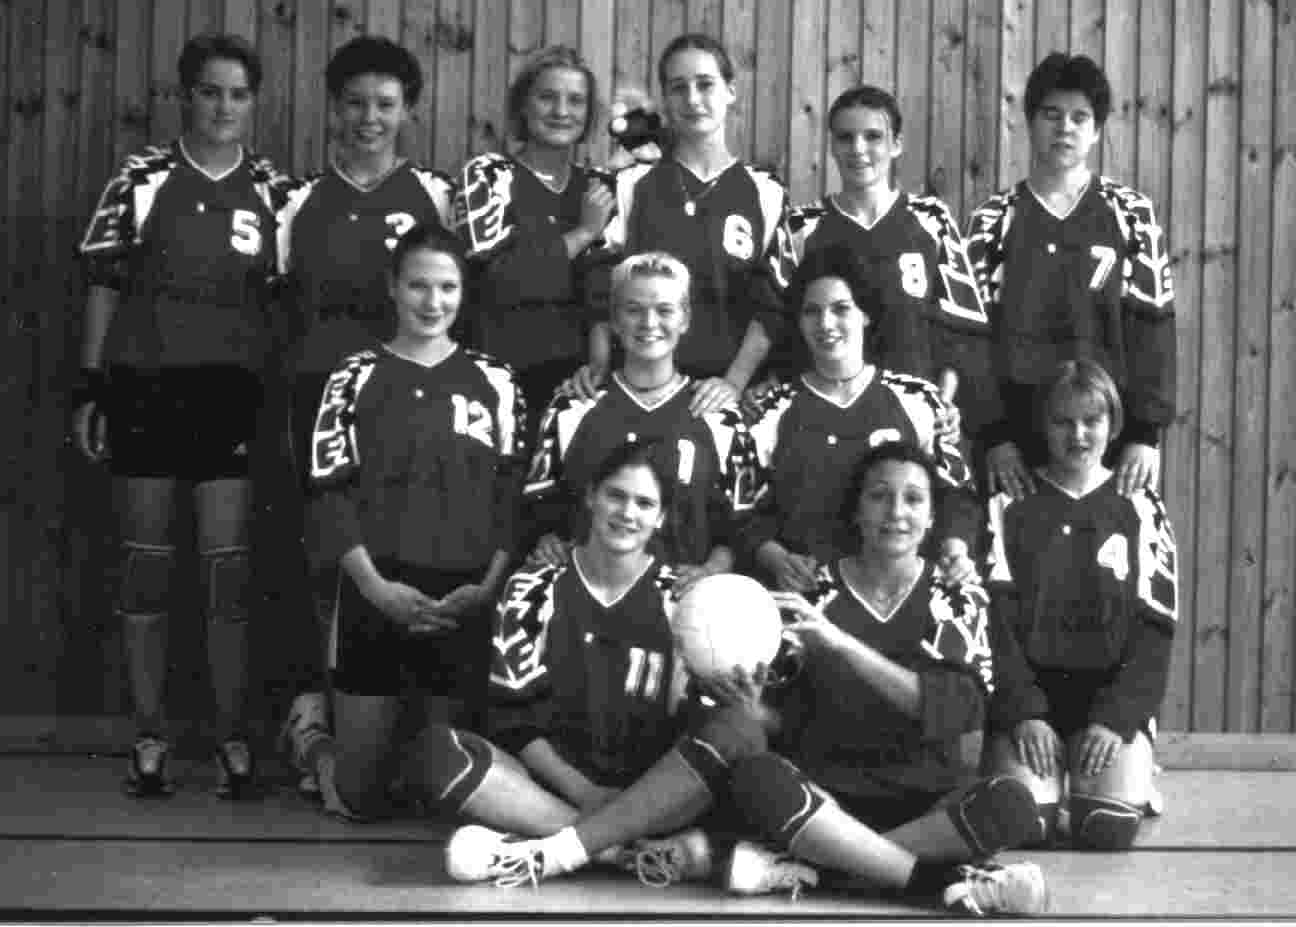 Volleyball Damen